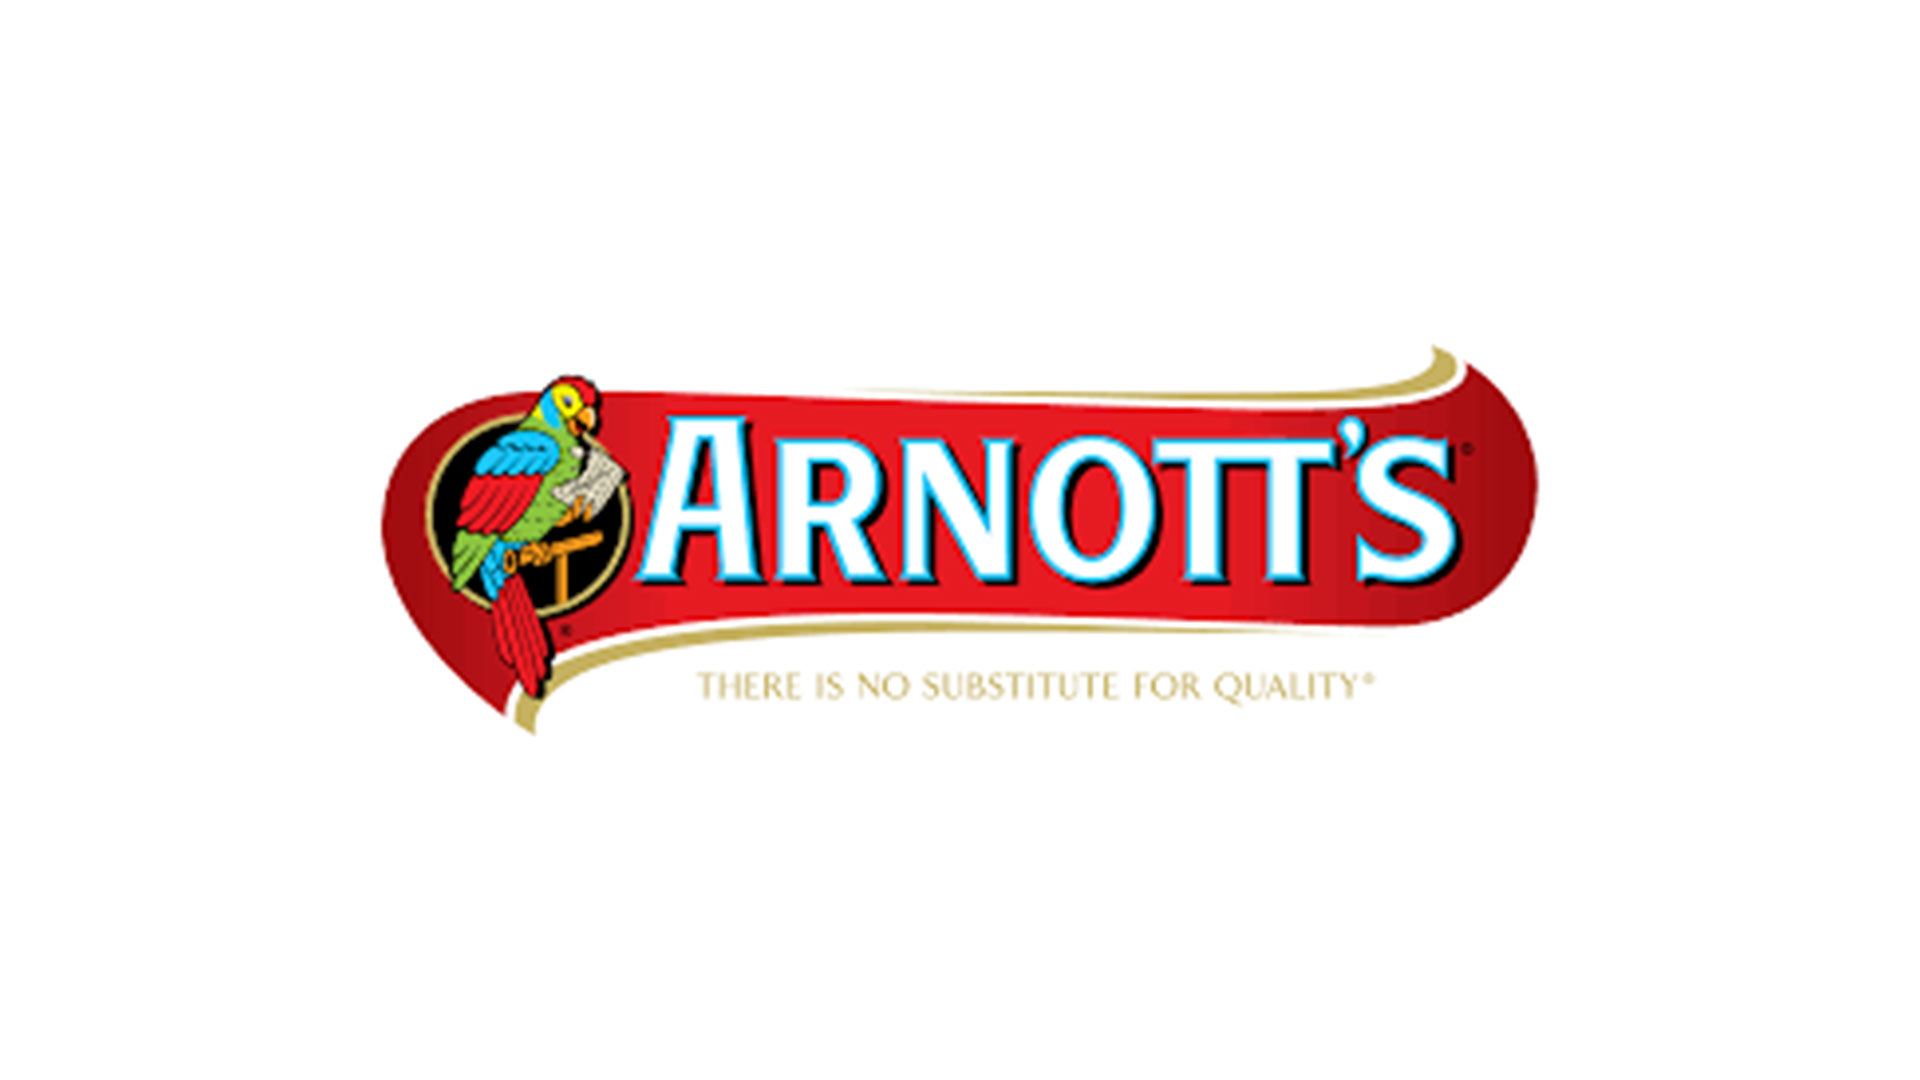 Arnotts